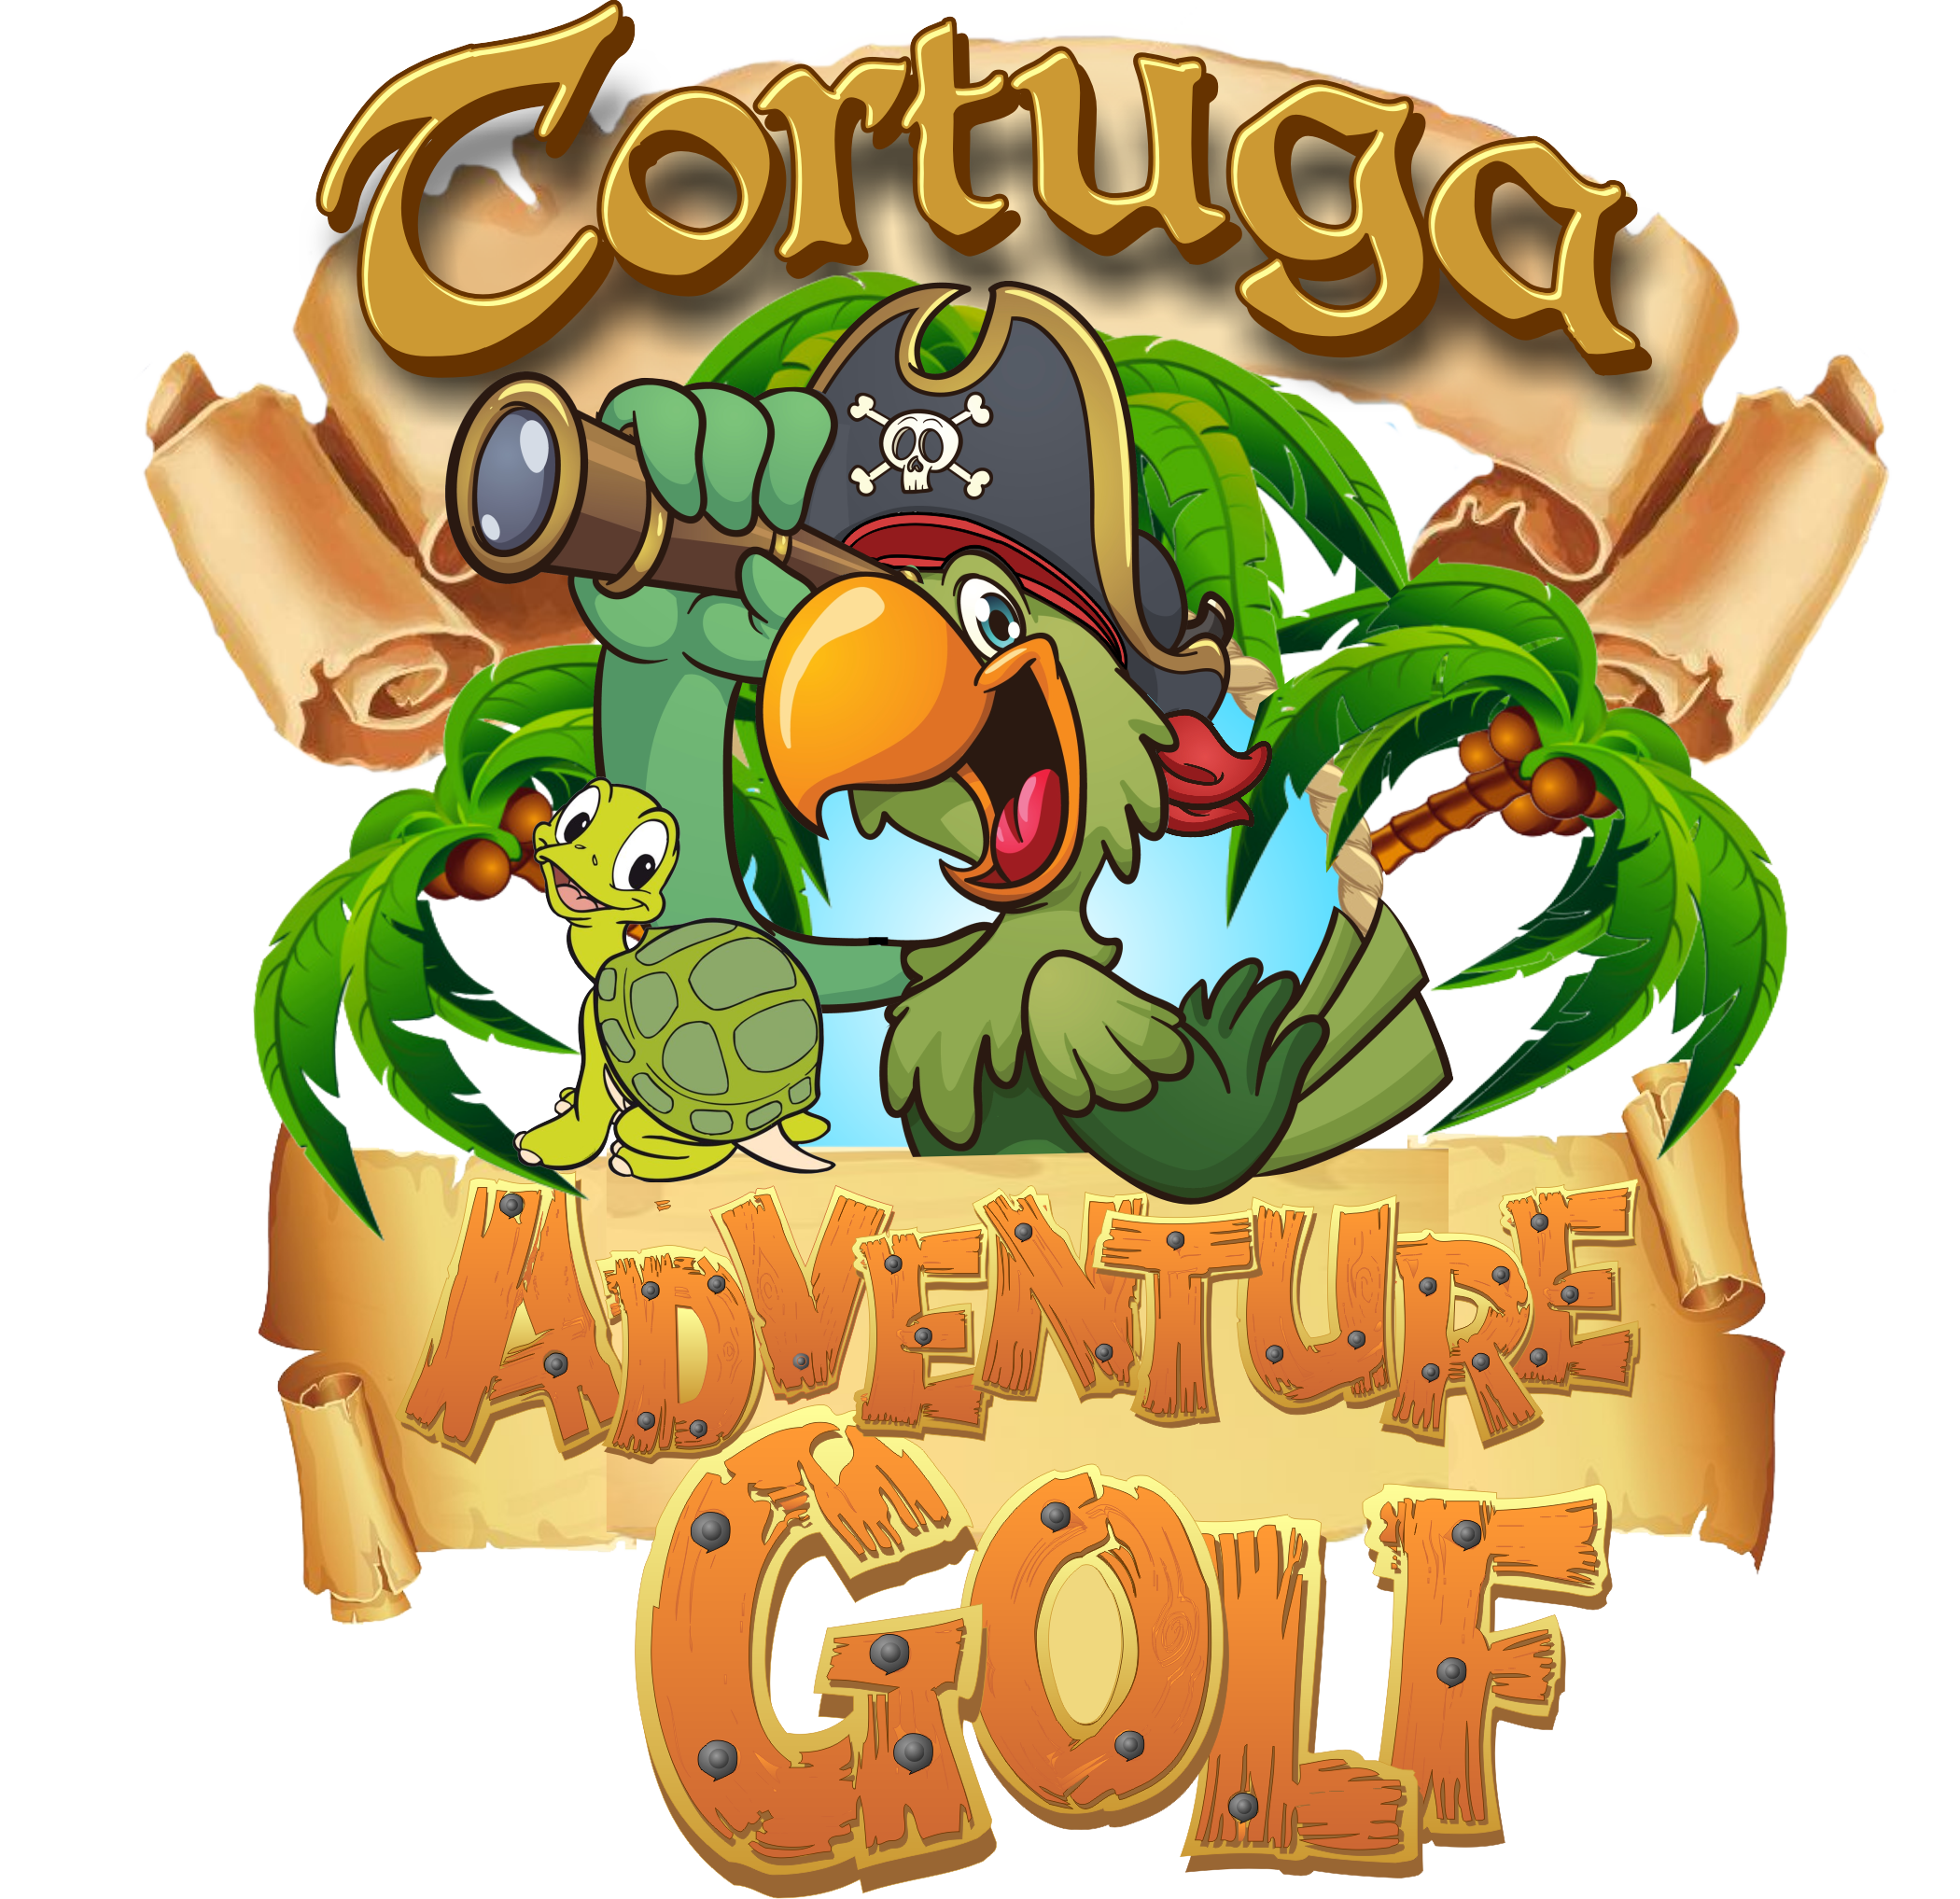 Tortuga Adventure Golf